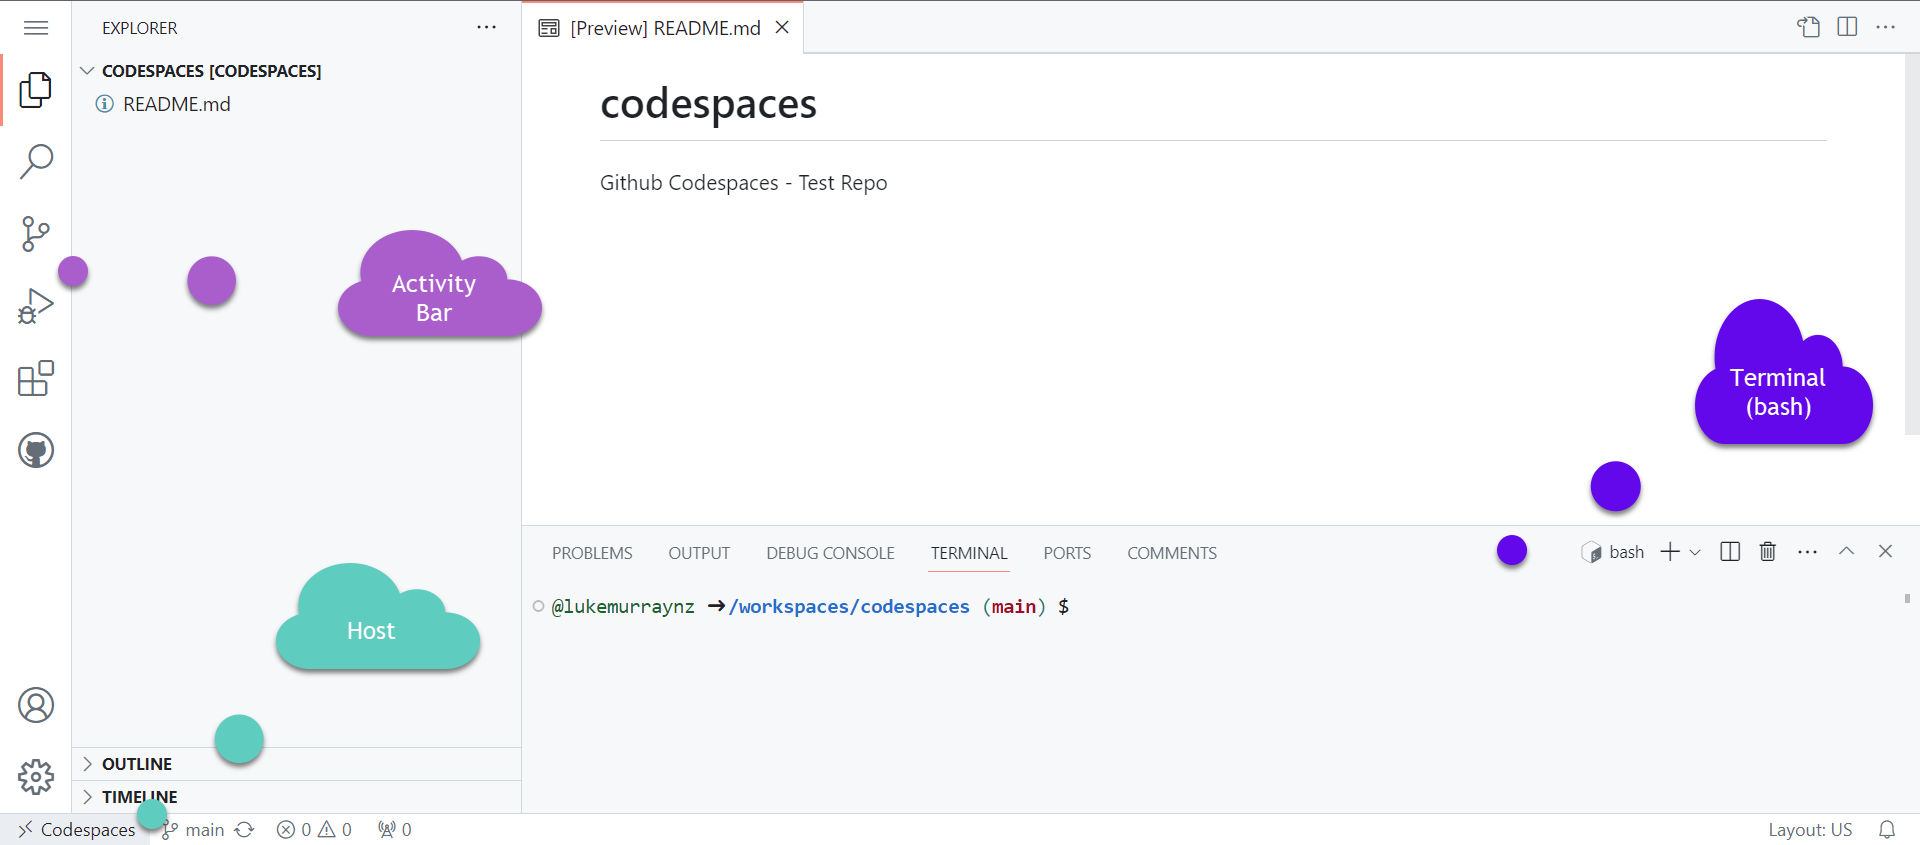 Github Codespaces - Overview